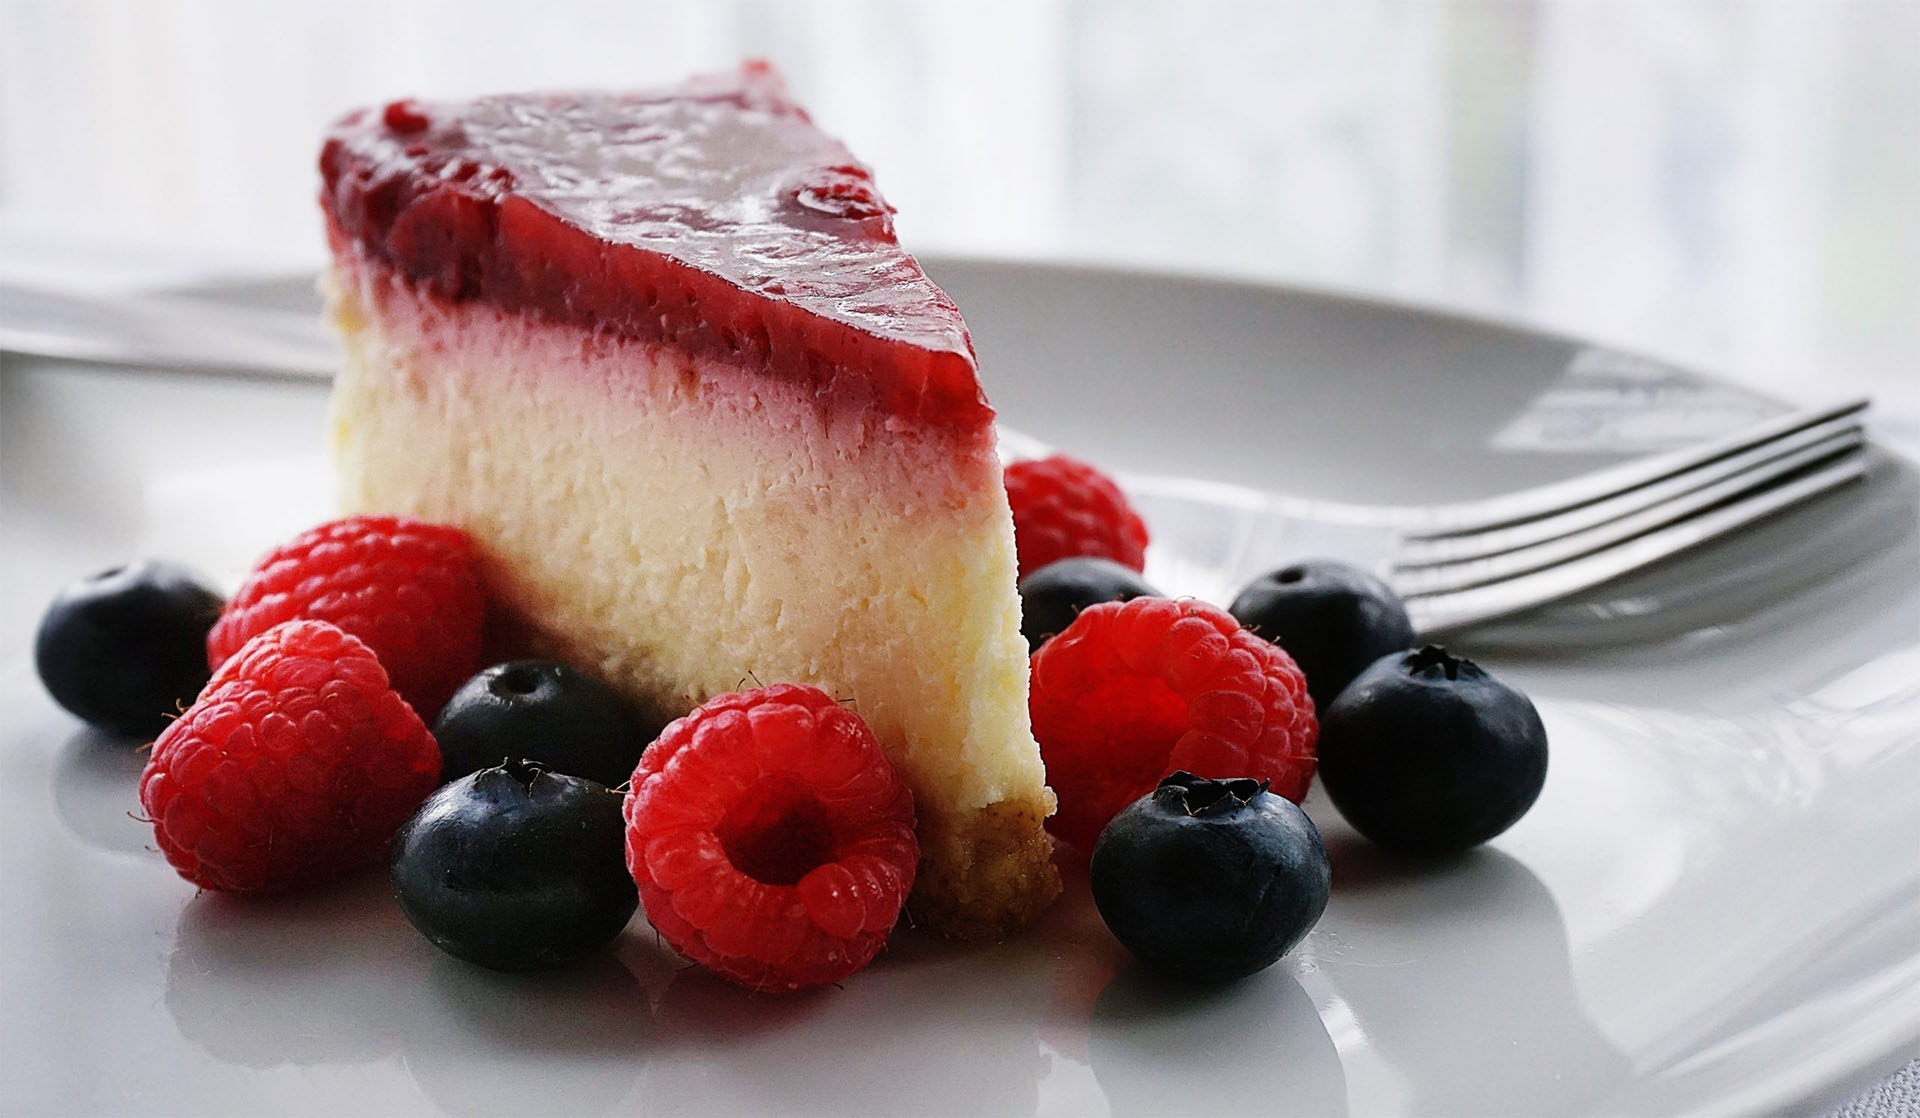 Raspberry “NoBake” Cheesecakes - Ask Dr. Ernst